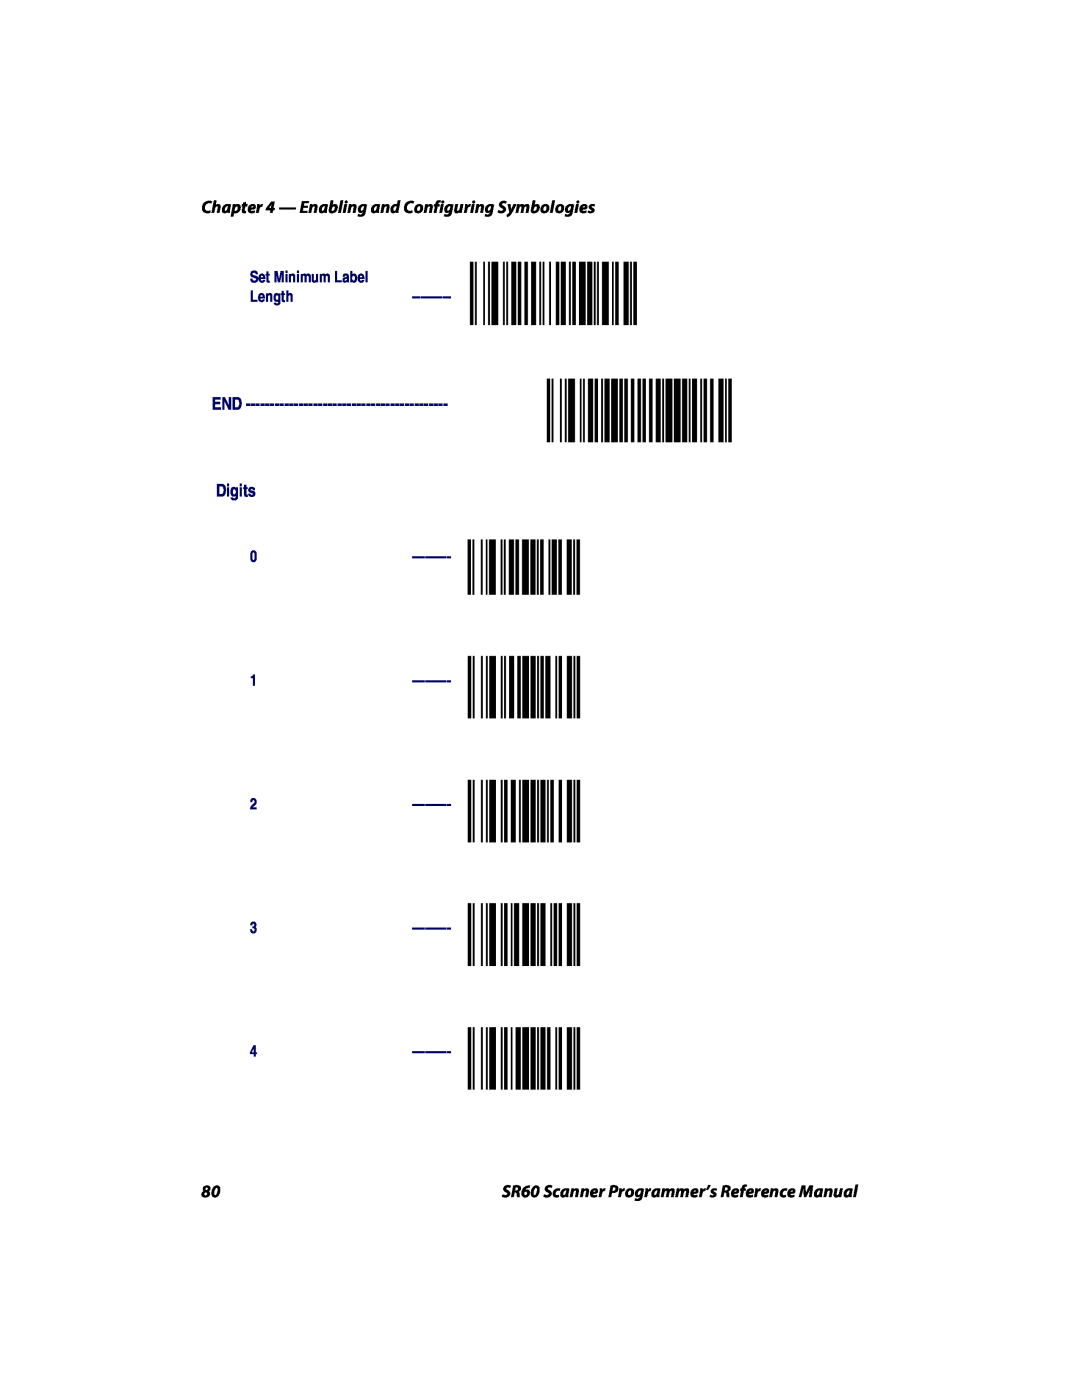 Intermec SR60 manual Enabling and Configuring Symbologies, END Digits, Set Minimum Label Length 